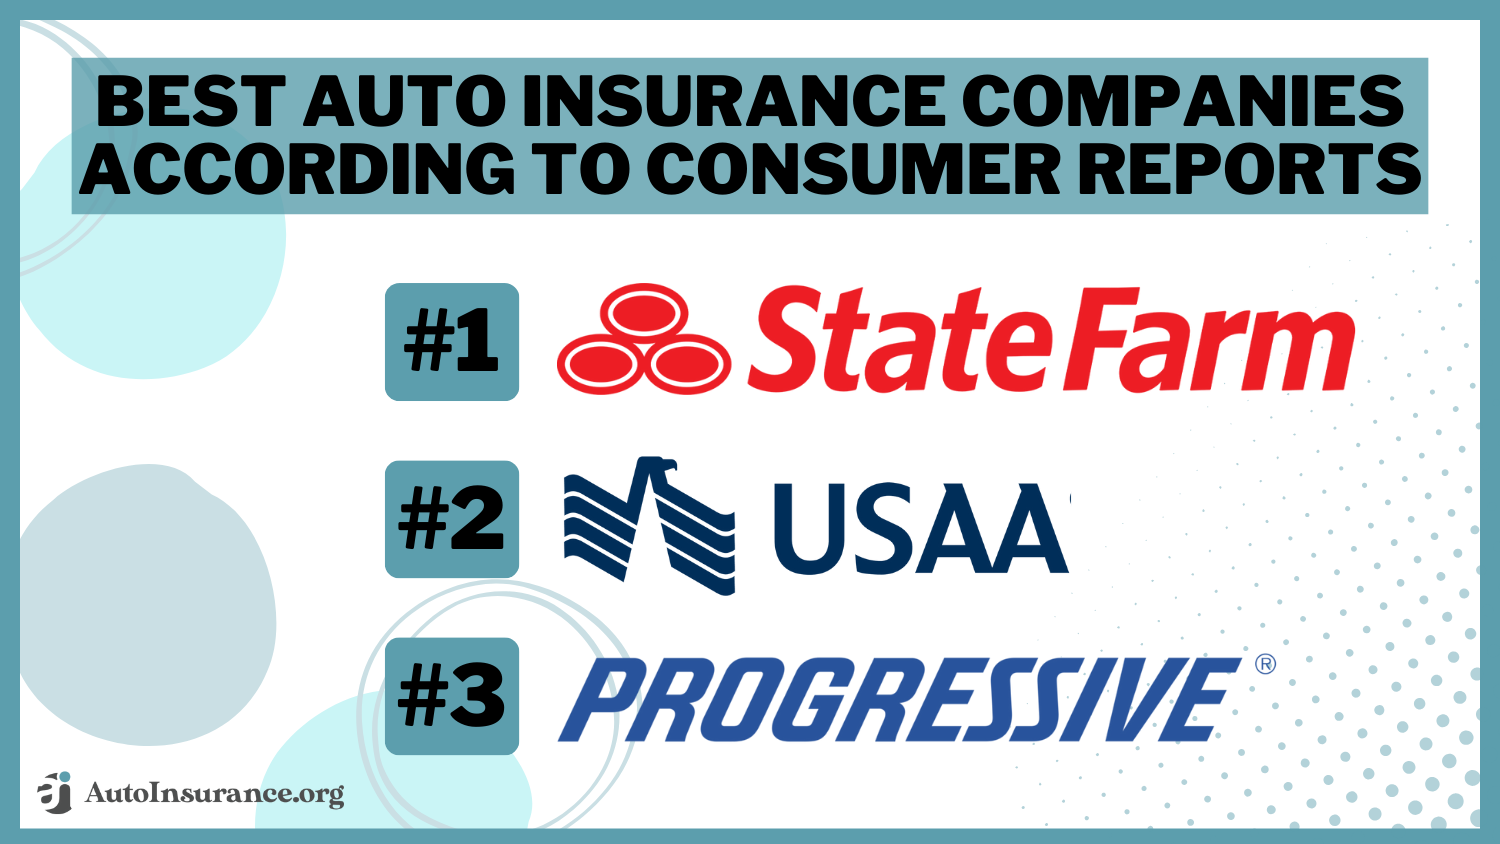 Best Auto Insurance Companies According to Consumer Reports: State Farm, USAA, Progressive 